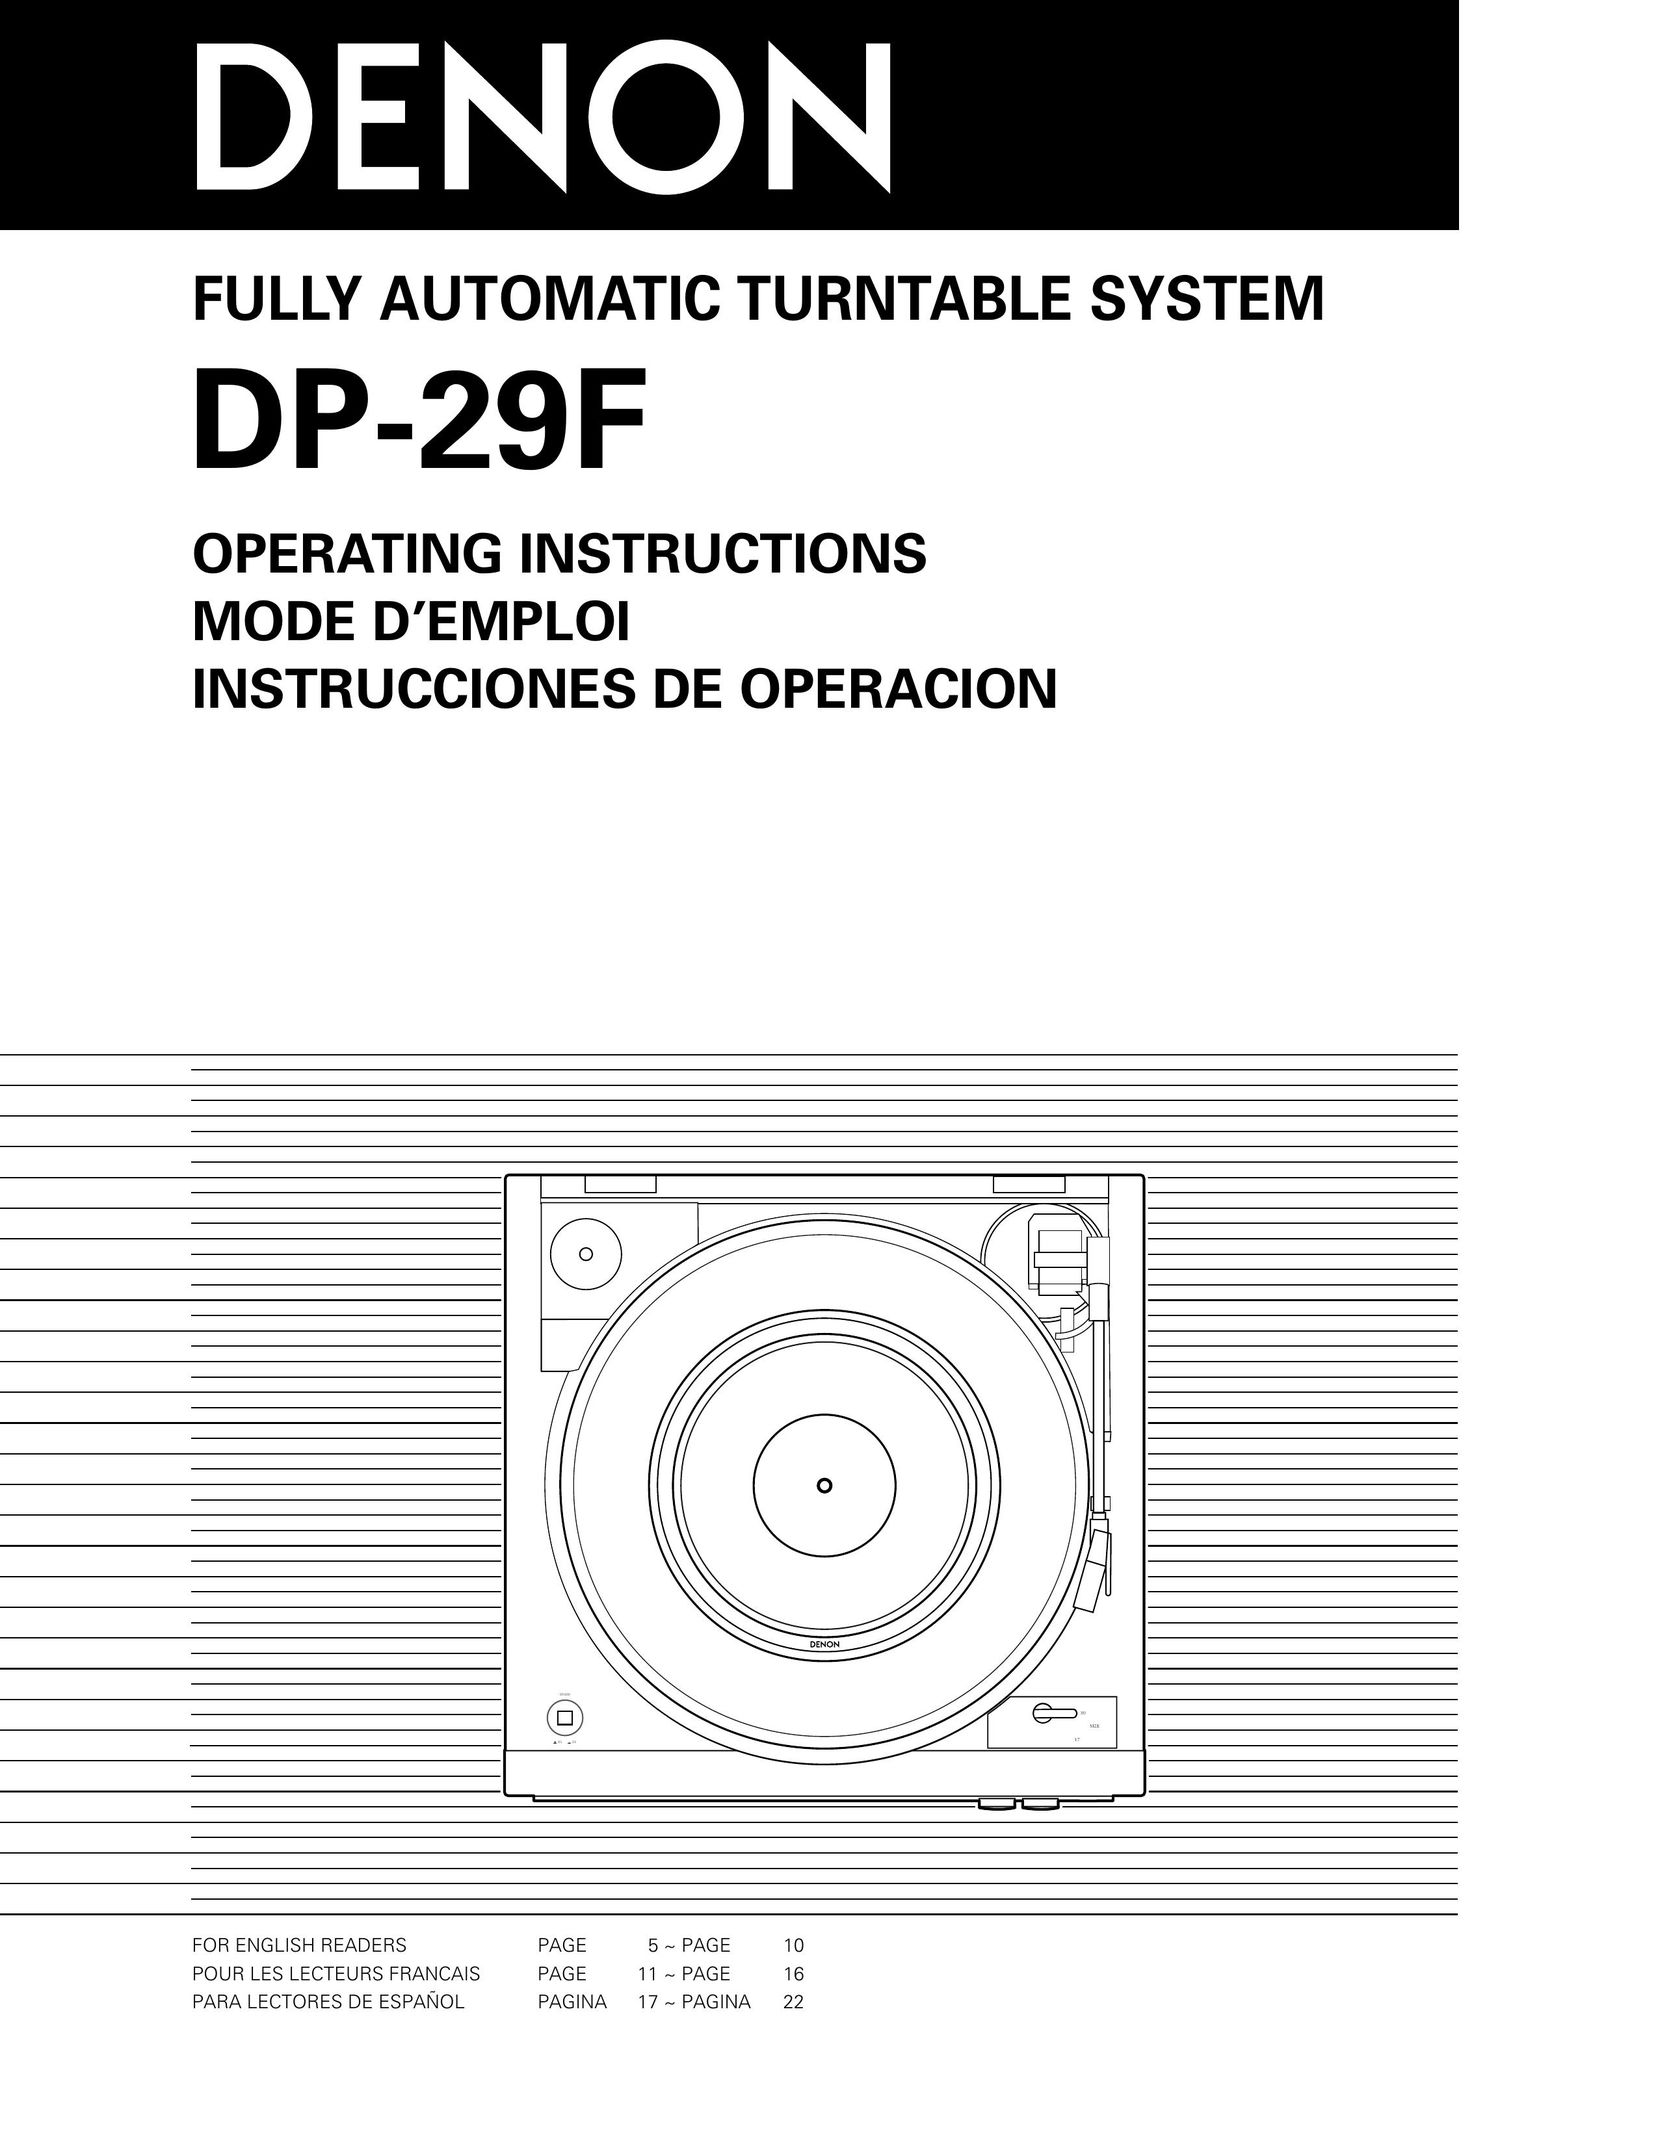 Denon DP-29F Turntable User Manual